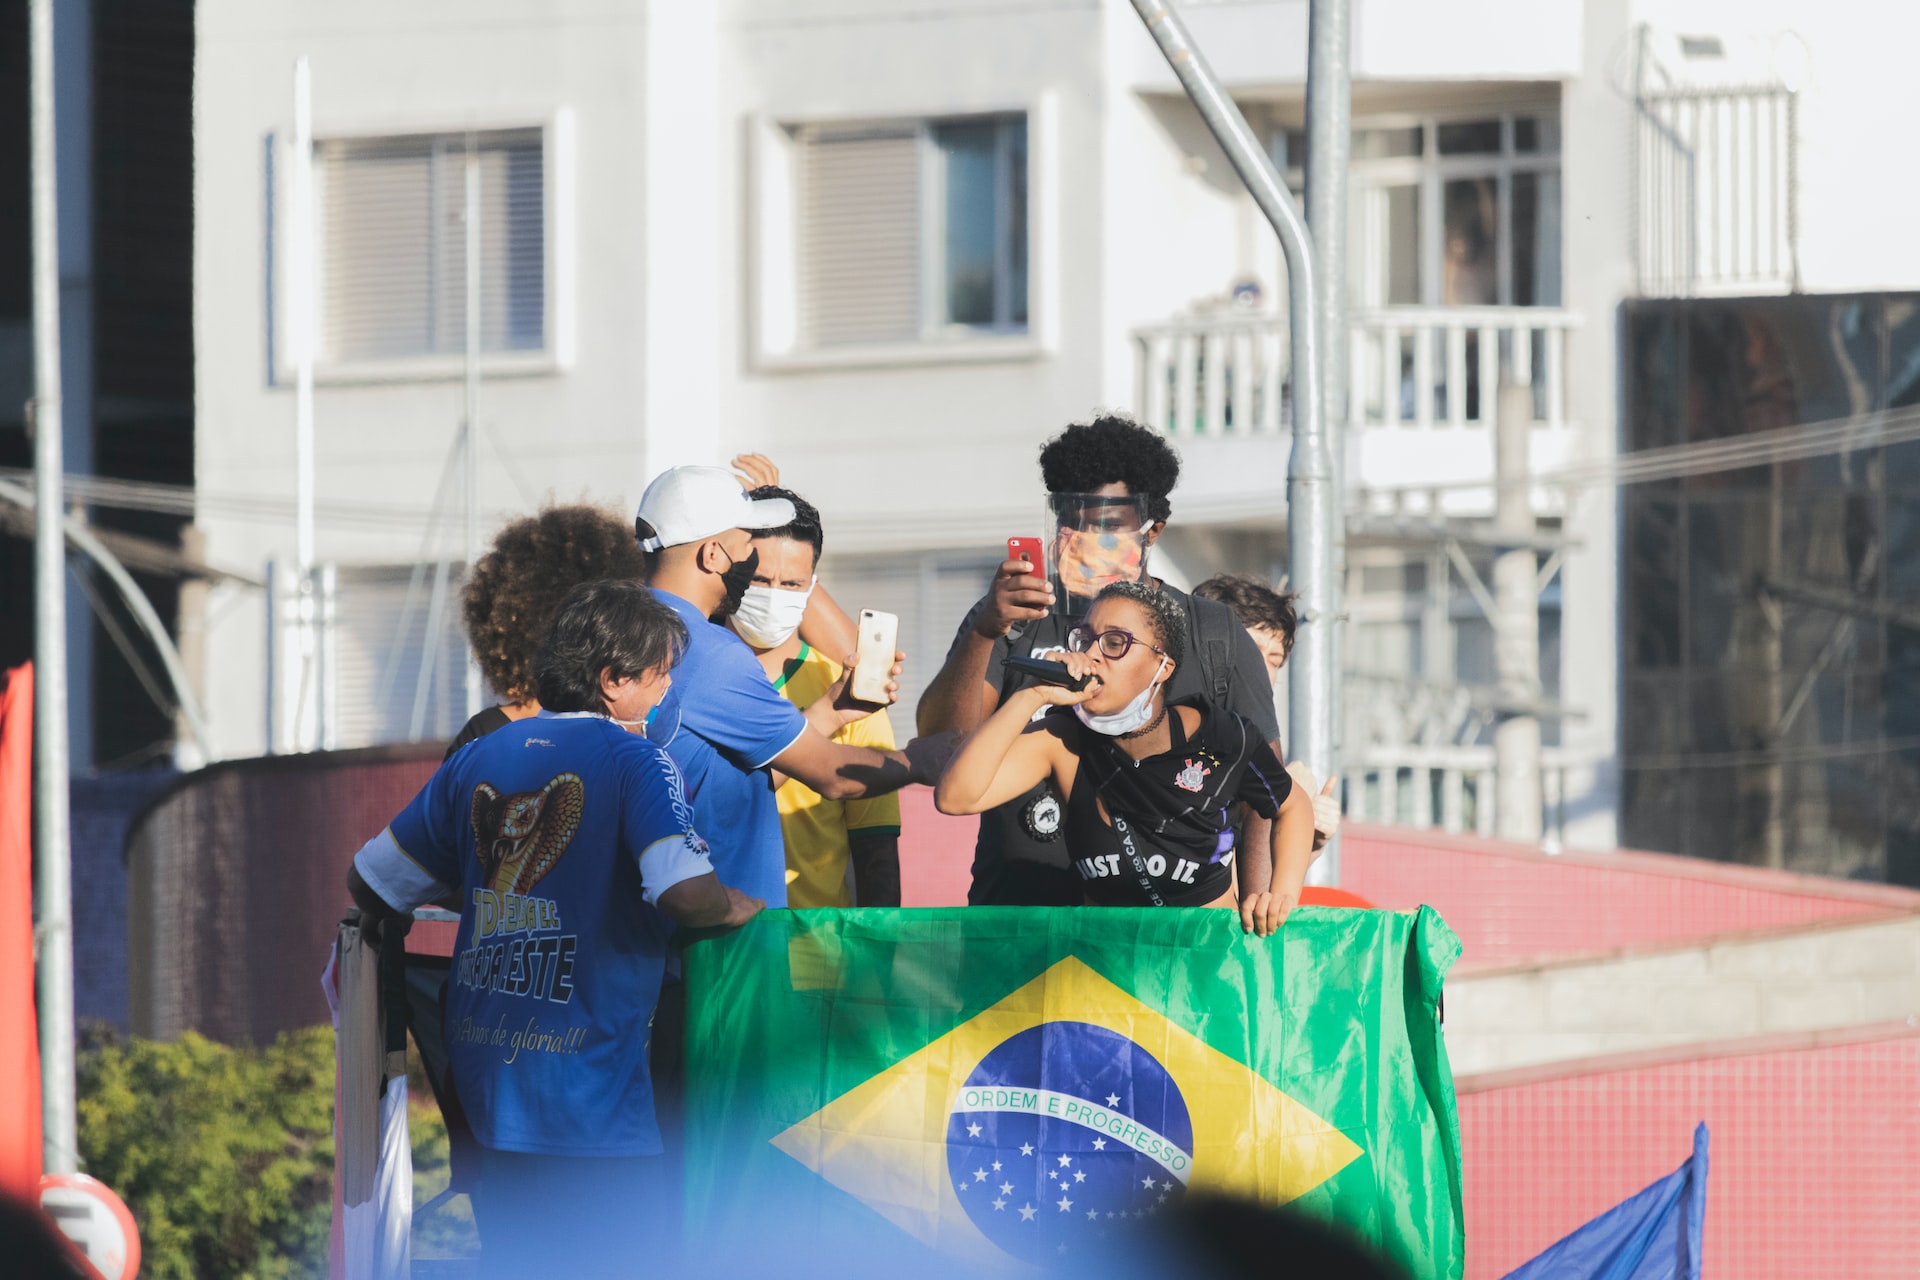 Supporters of former Brazilian President Jair Bolsonaro create havoc a week after Lula da Silva takes office